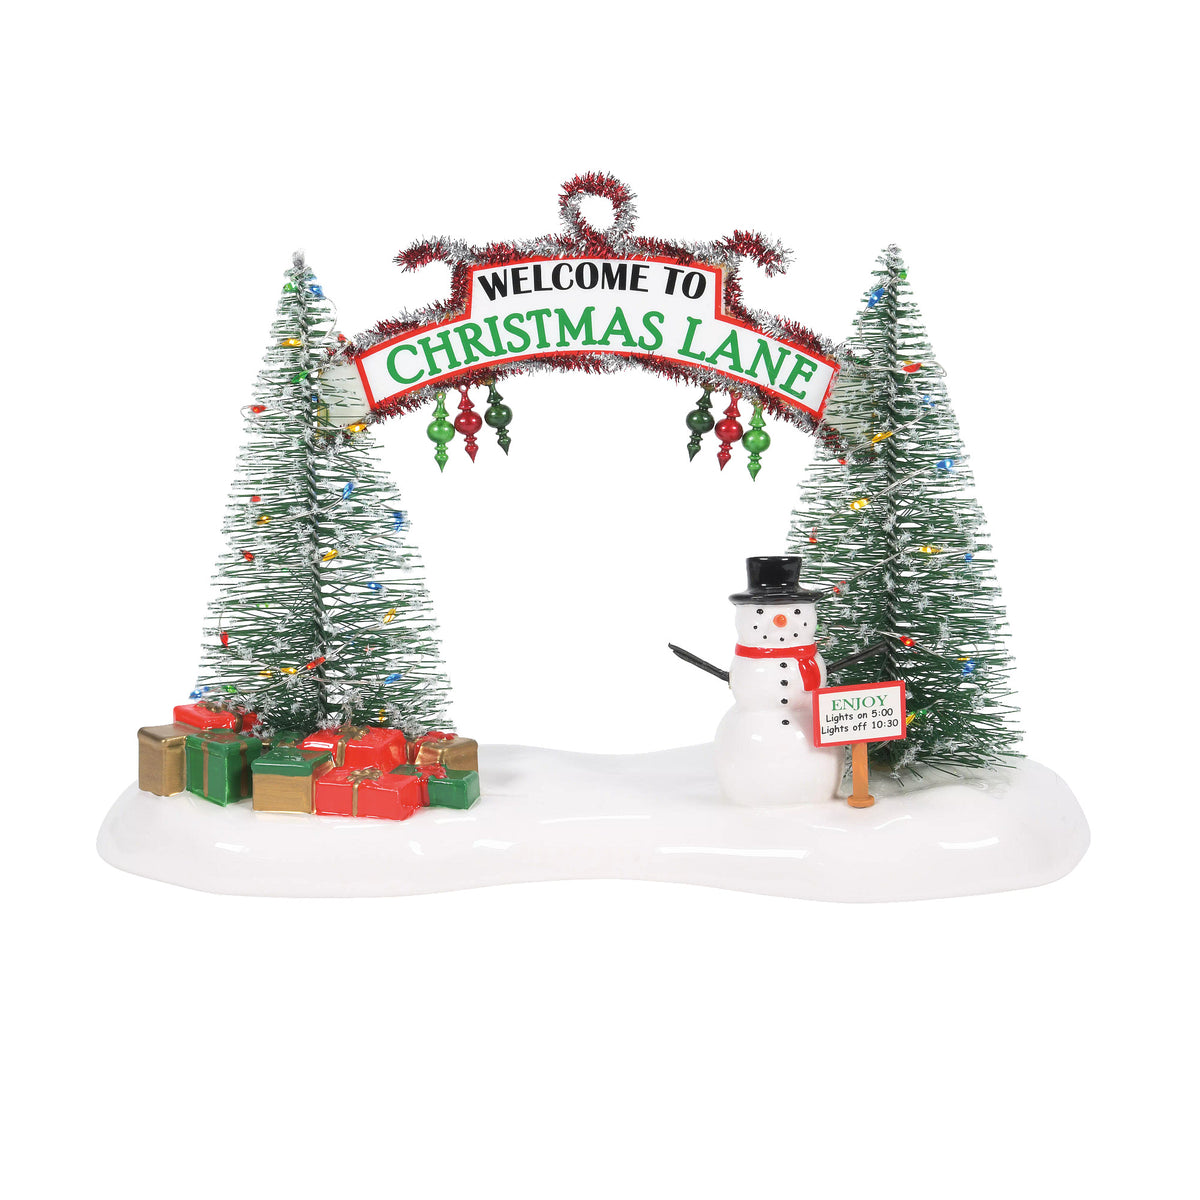 Dept 56 A FESTIVE CHRISTMAS GATE Christmas Lane Snow Village 6007268 New 2021